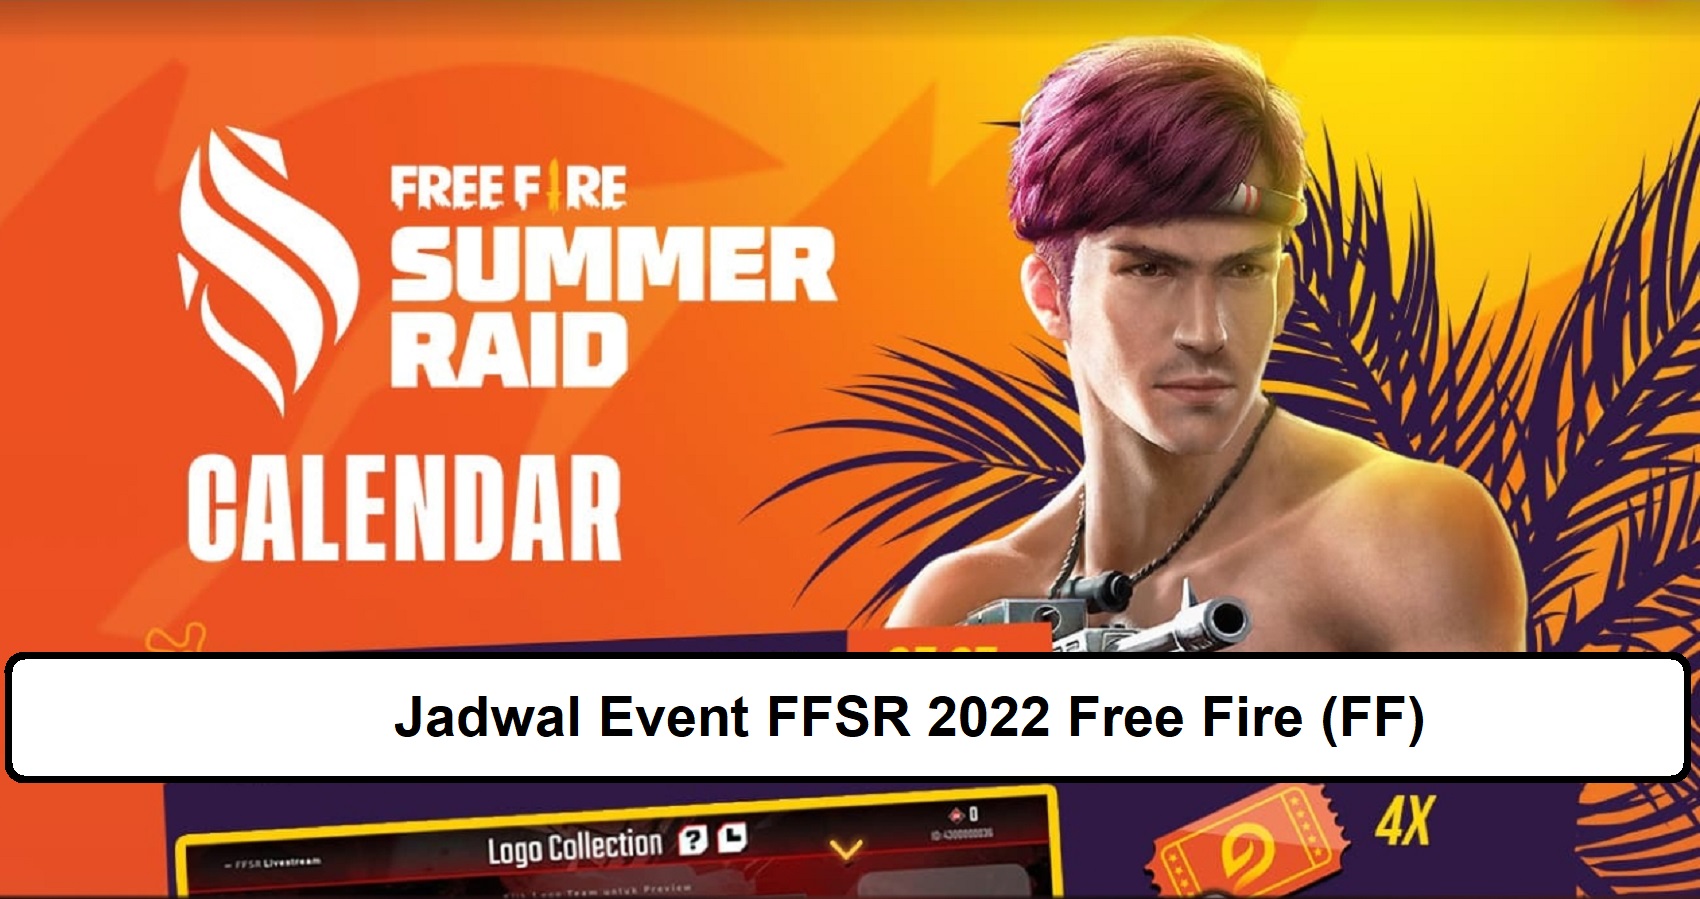 Jadwal Event FFSR 2022 Free Fire (FF)